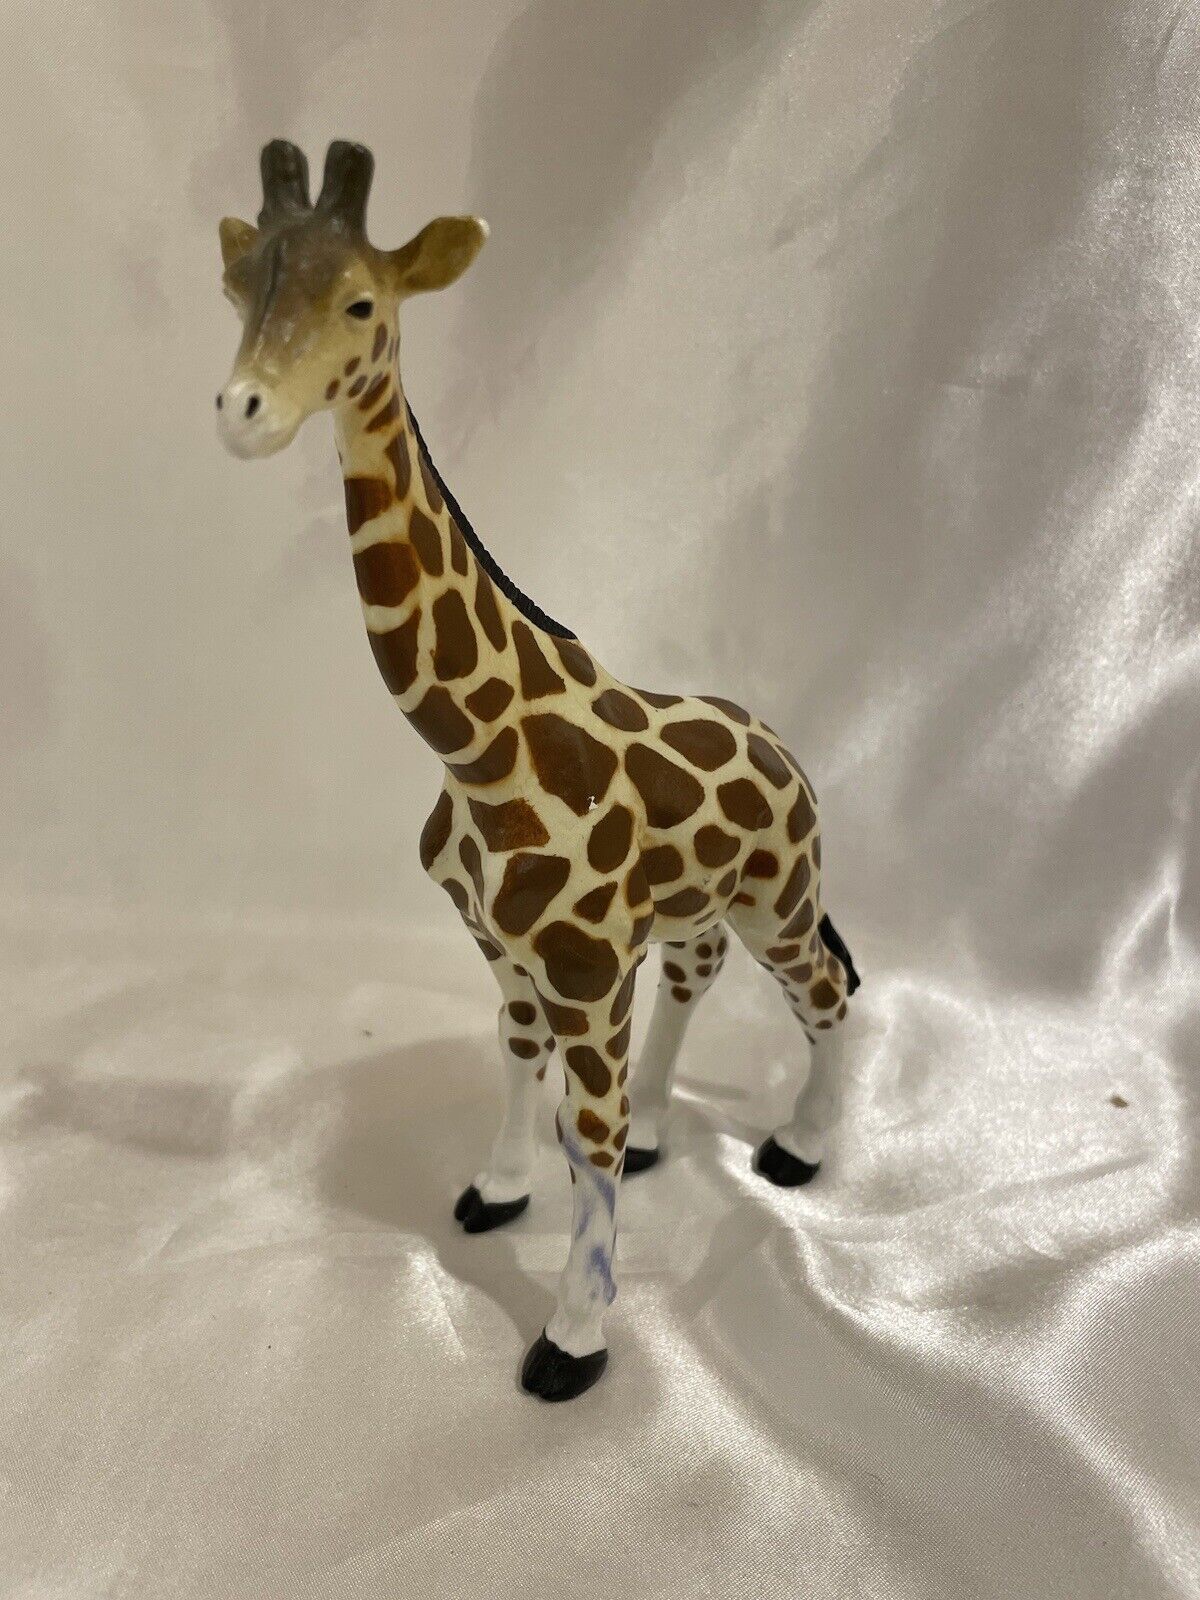 1996 Safari Ltd Adult Giraffe Wildlife Animal Toy Figure Figurine 7” Tall